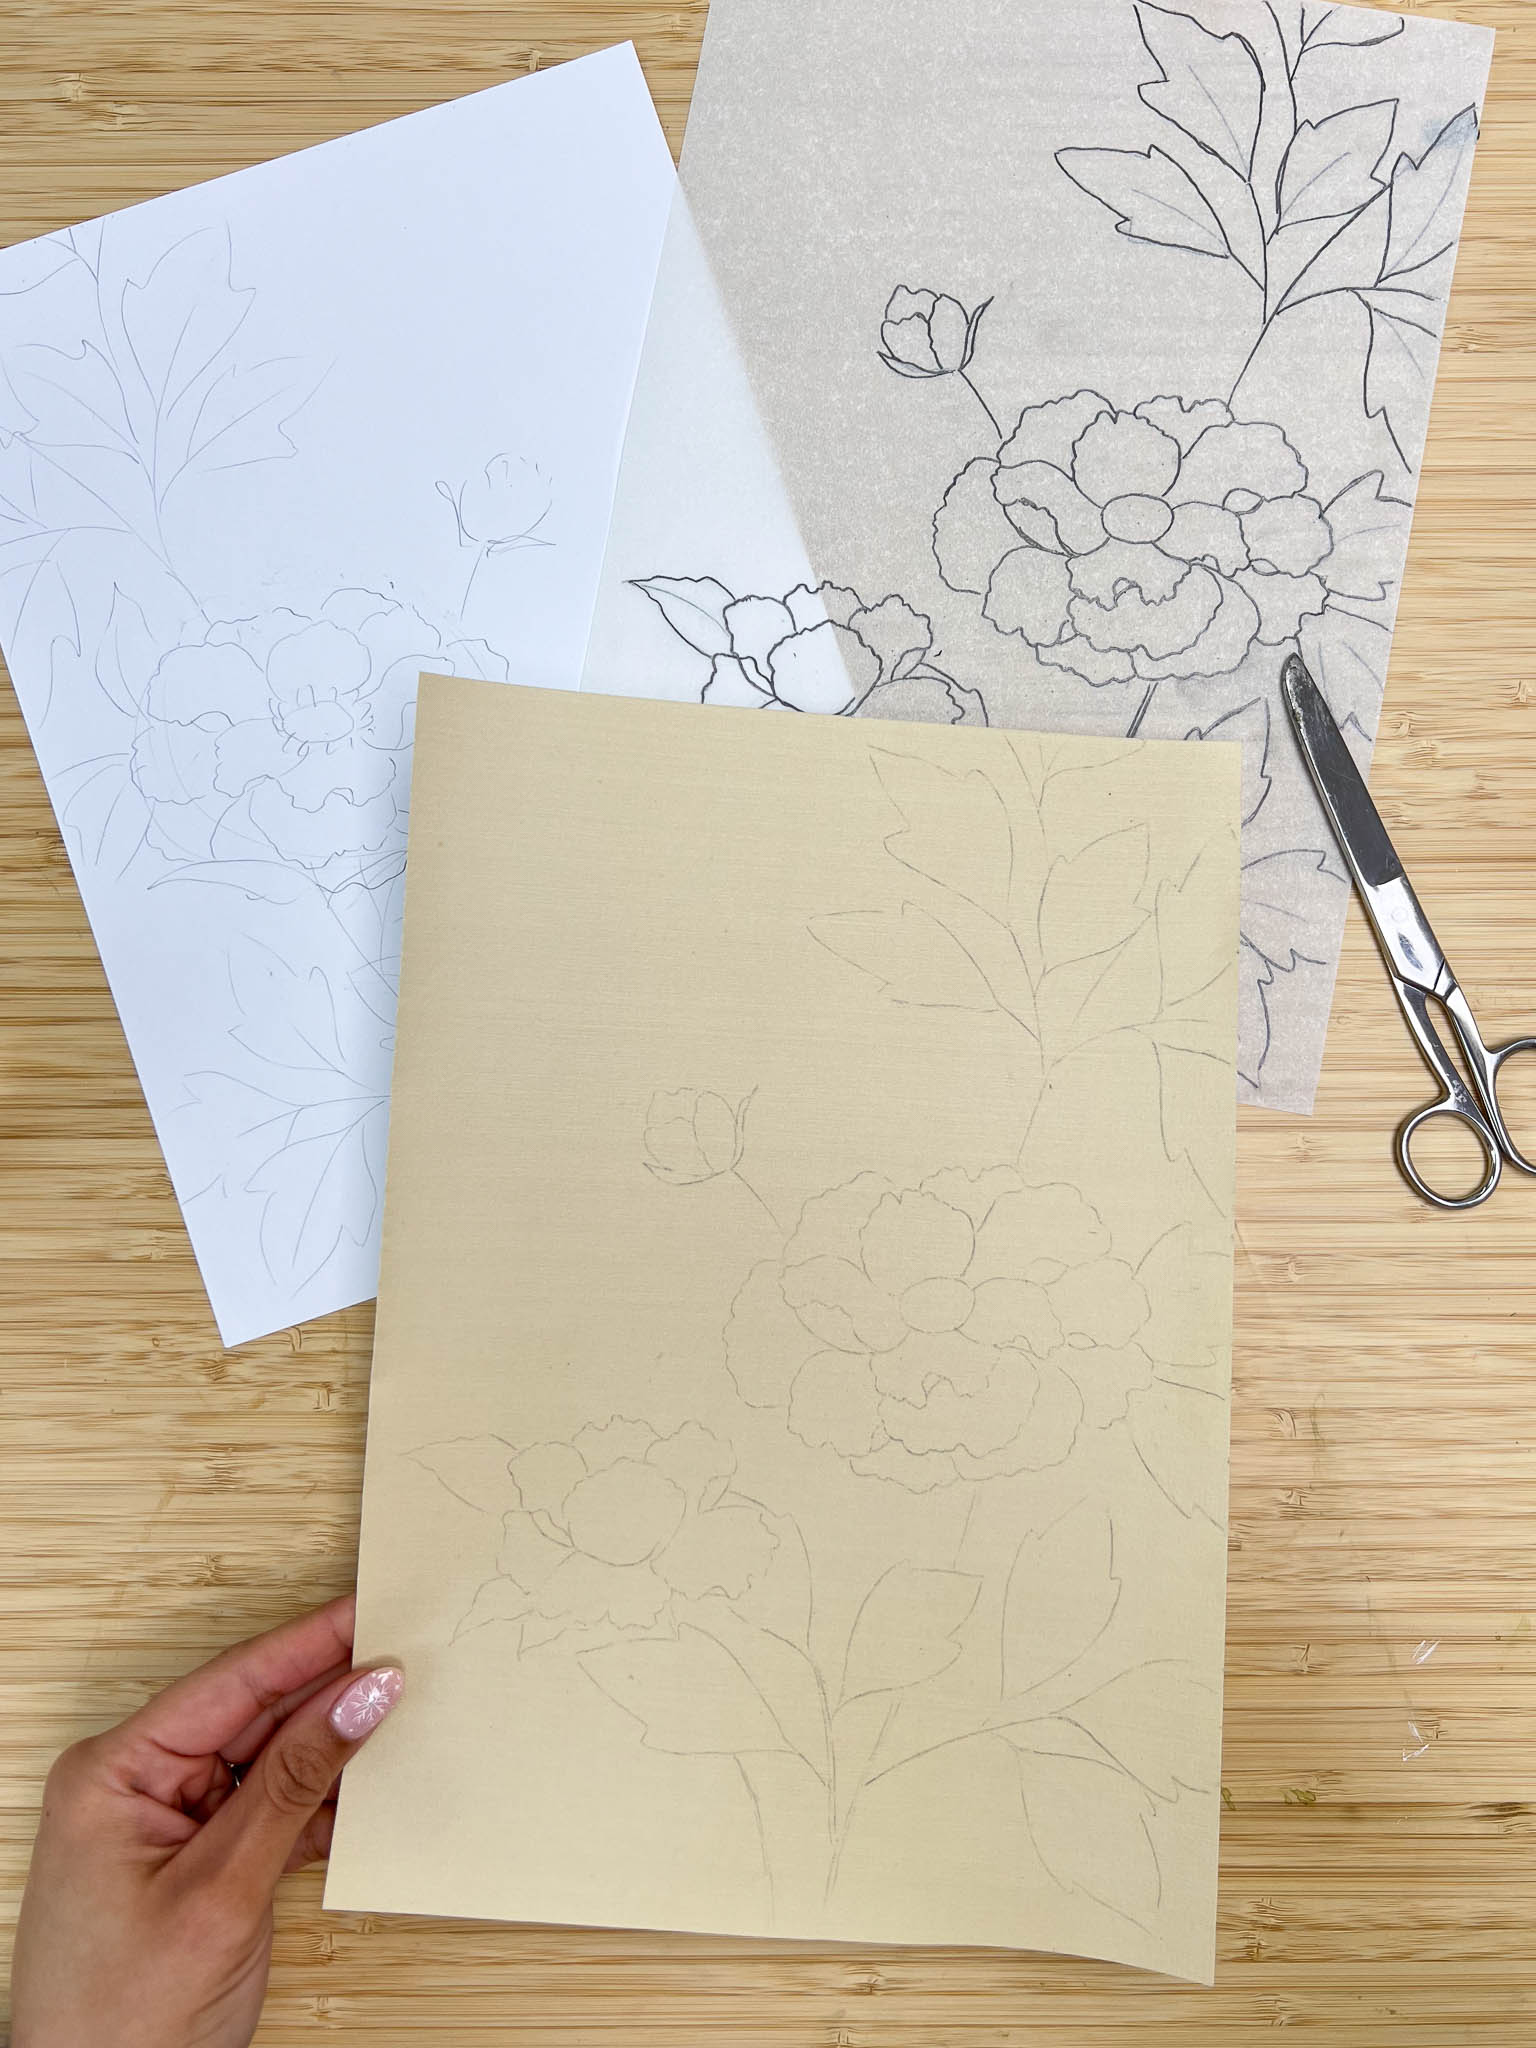 Artist Diane Hill's original floral chinoiserie design in stages; original floral sketch, traced botanical design, final art design on silk paper